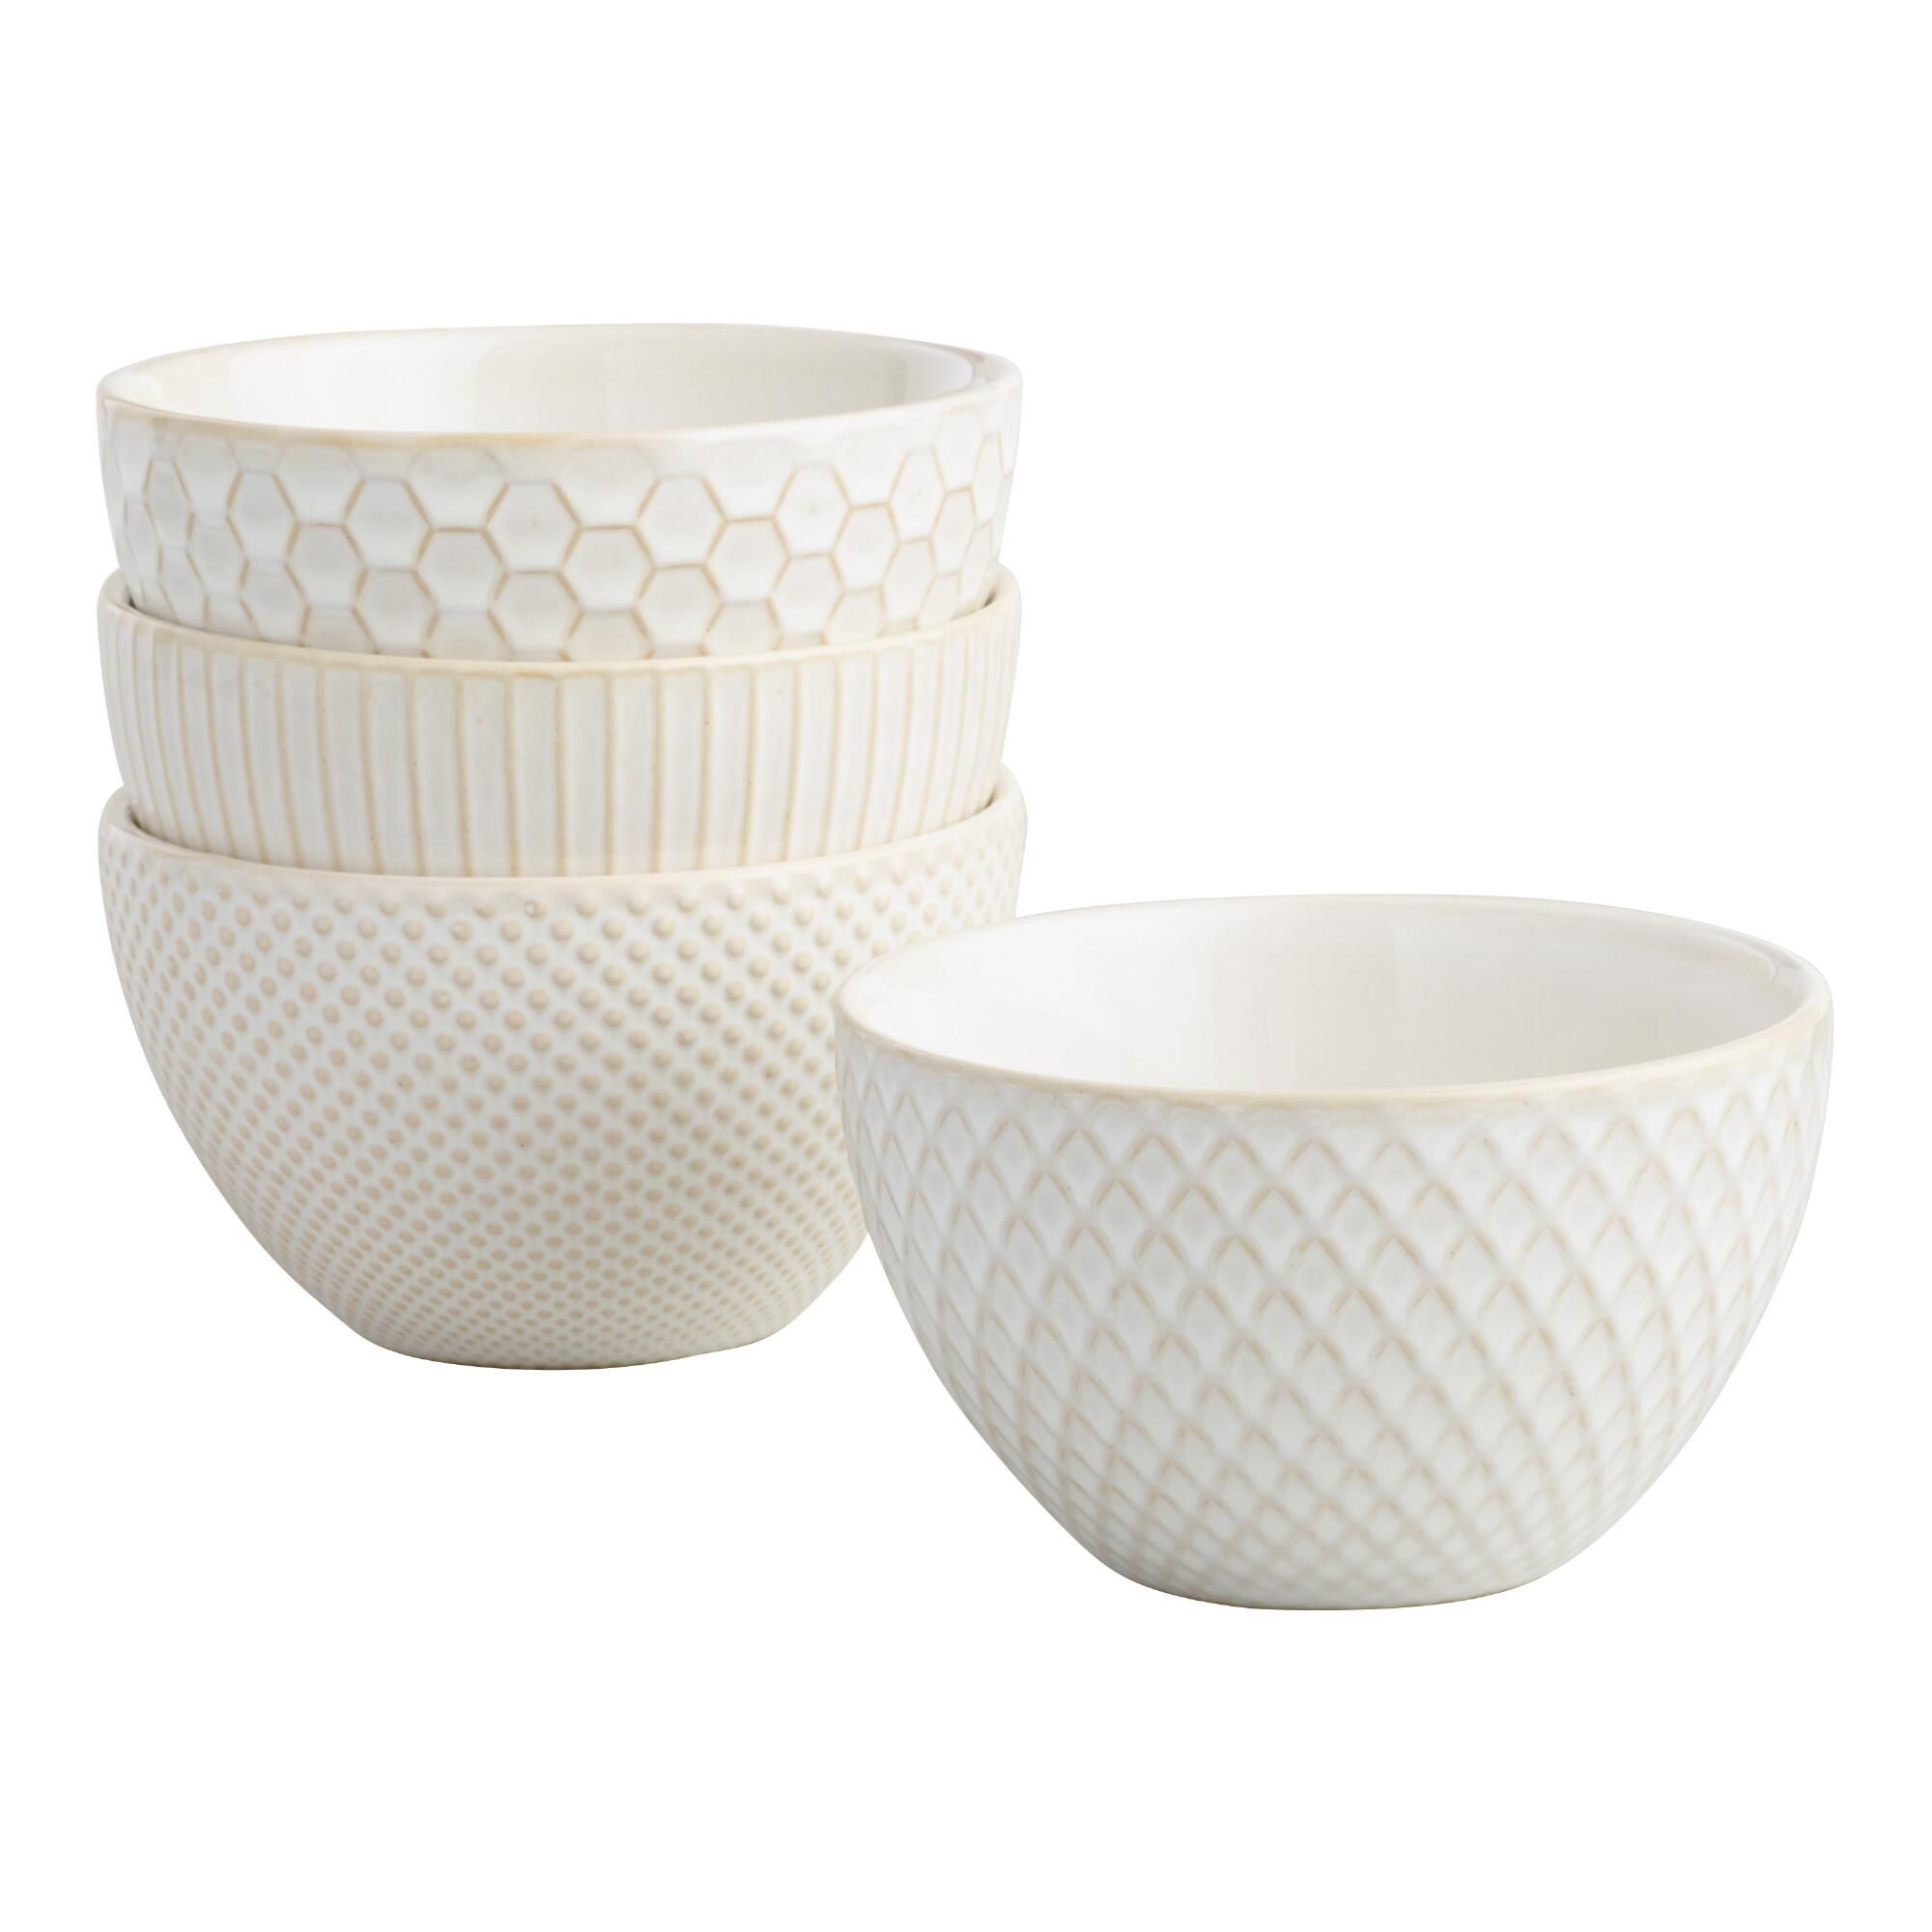 Small White Textured Stoneware Bowls Set of 4 by World Market | World Market